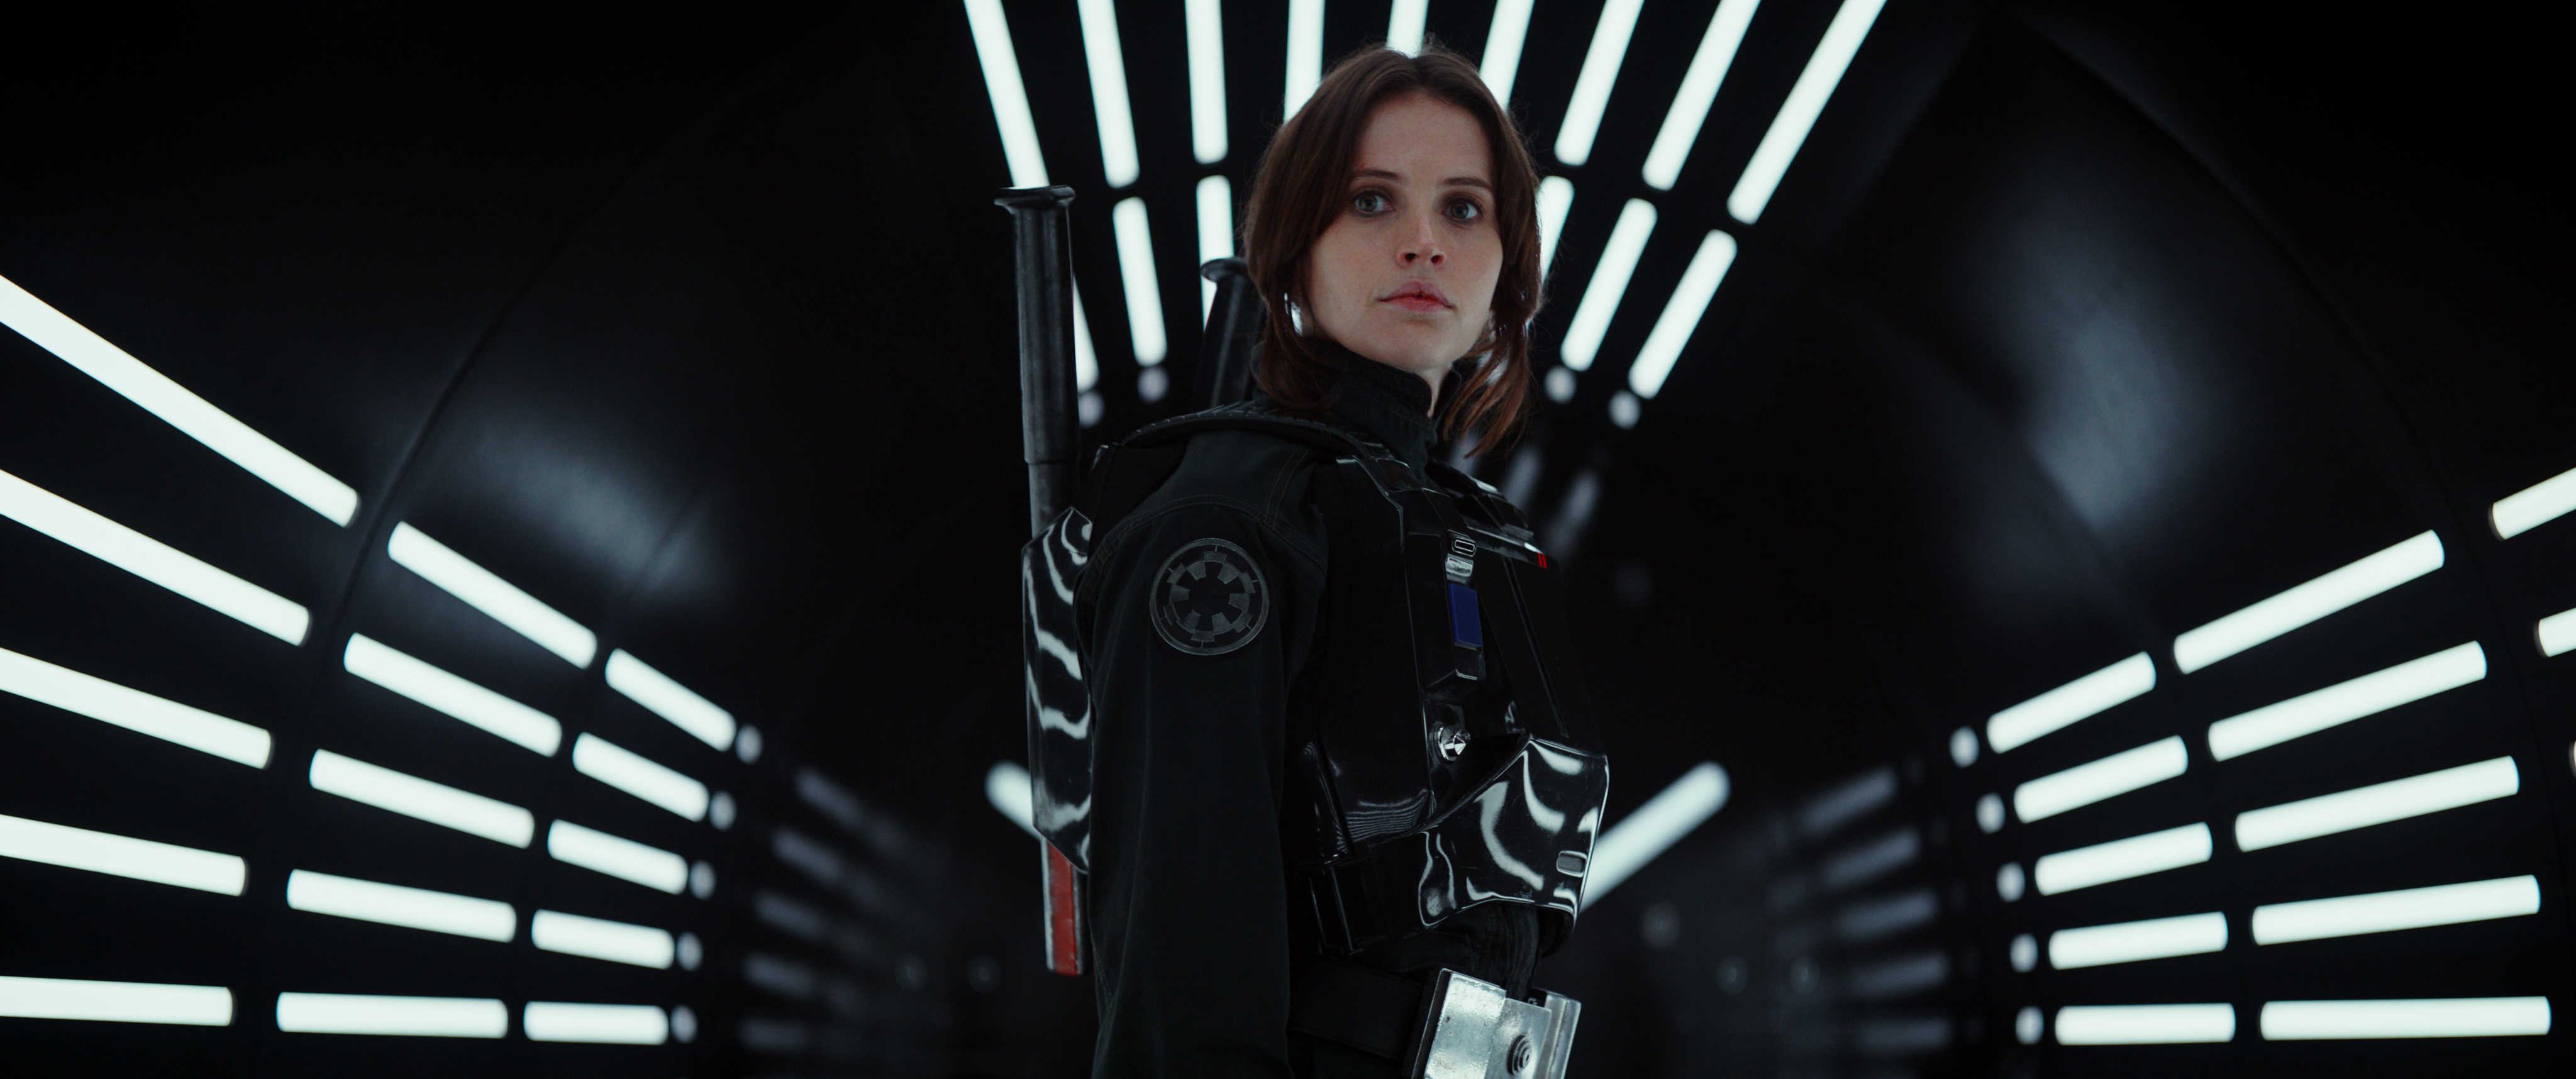 Rogue One: A Star Wars Story will star Felicity Jones as a Rebel spy.